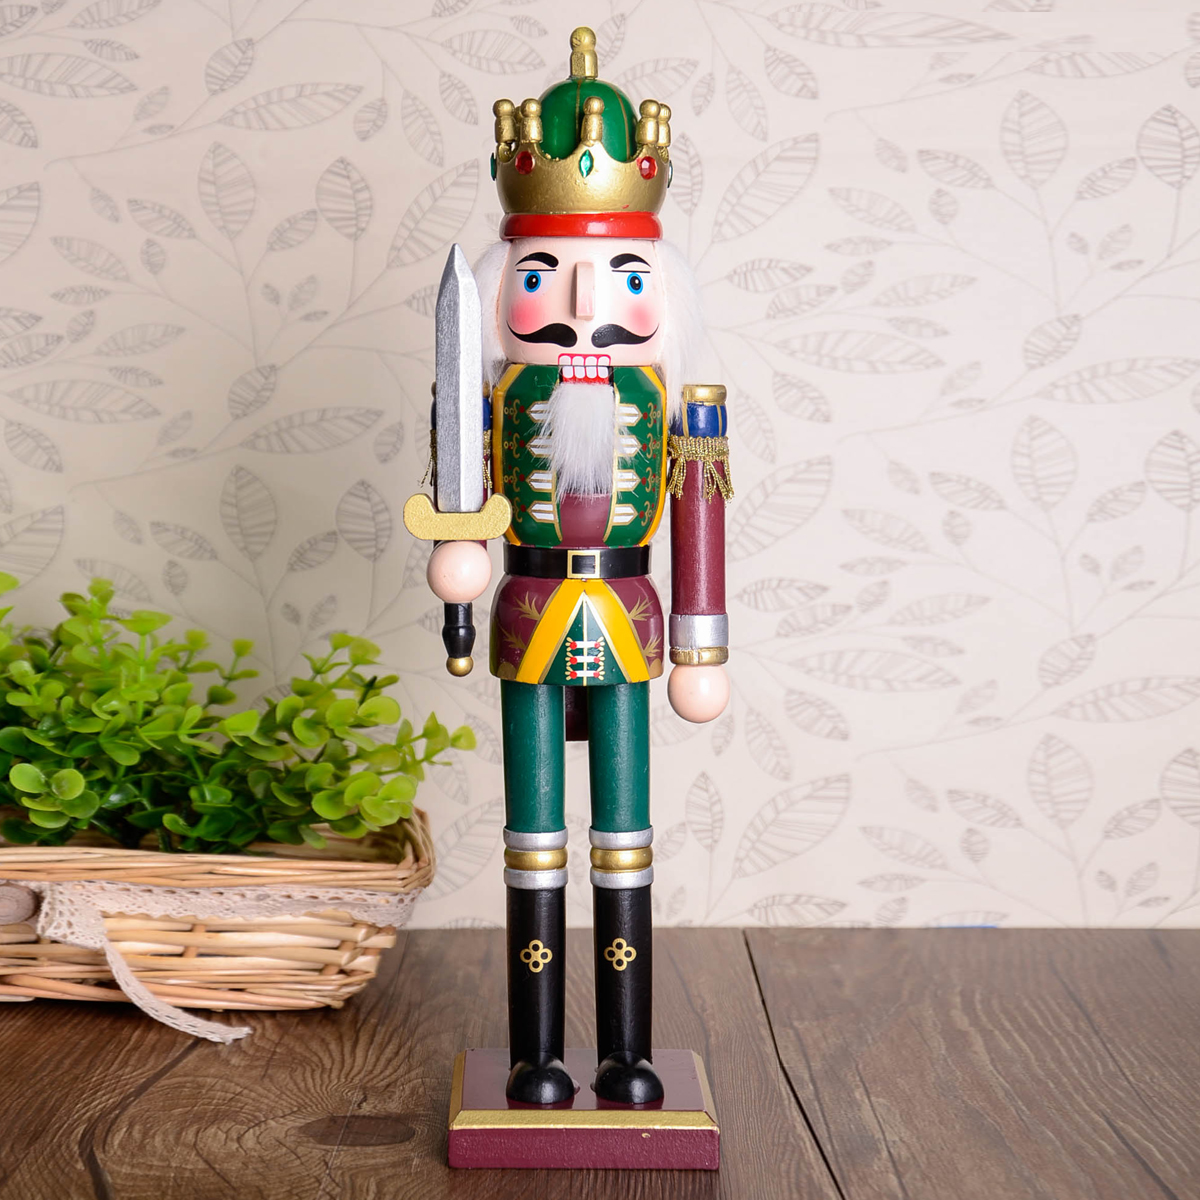 30cm-Wooden-Nutcracker-Doll-Soldier-Vintage-Handcraft-Decoration-Christmas-Gifts-1236558-4